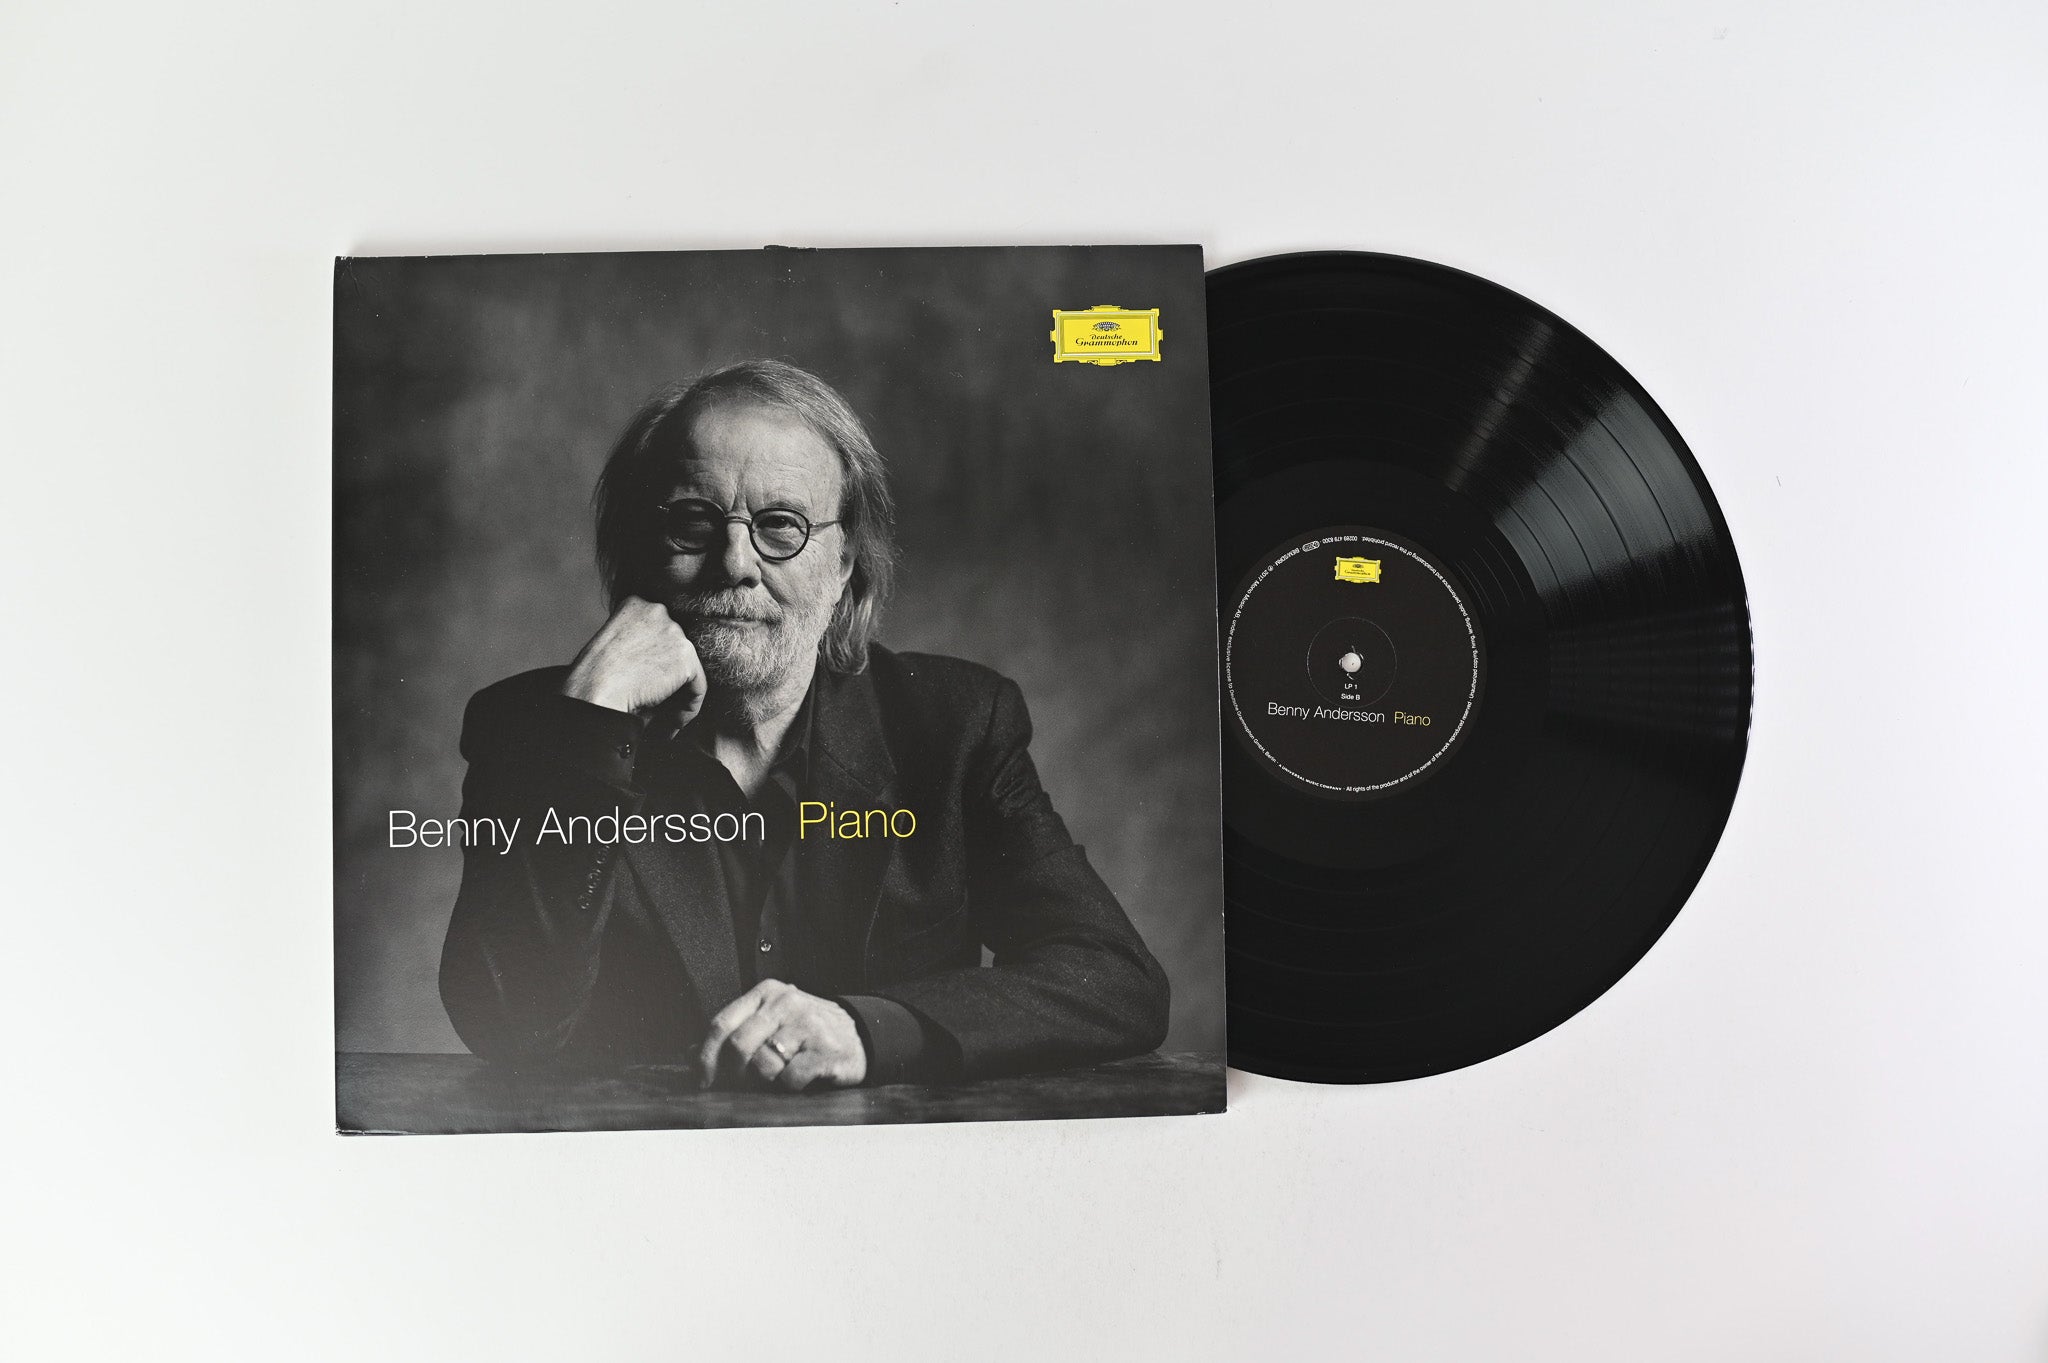 Benny Andersson - Piano on Deutsche Grammophon